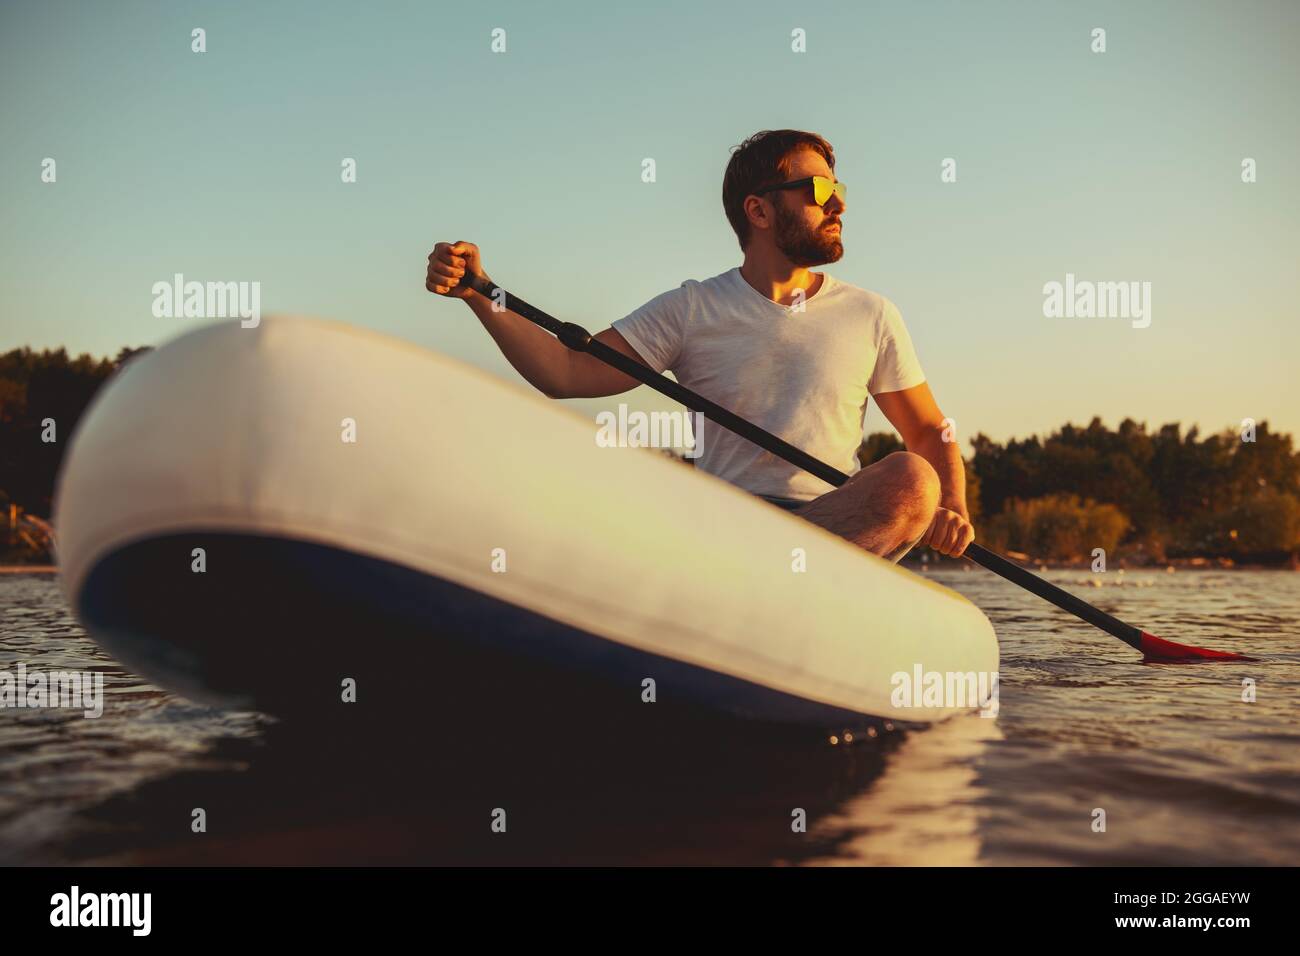 Hipster spaziert auf dem Boot am Sunset Lake. Paddle Boarder sitzt auf Paddleboards Stockfoto